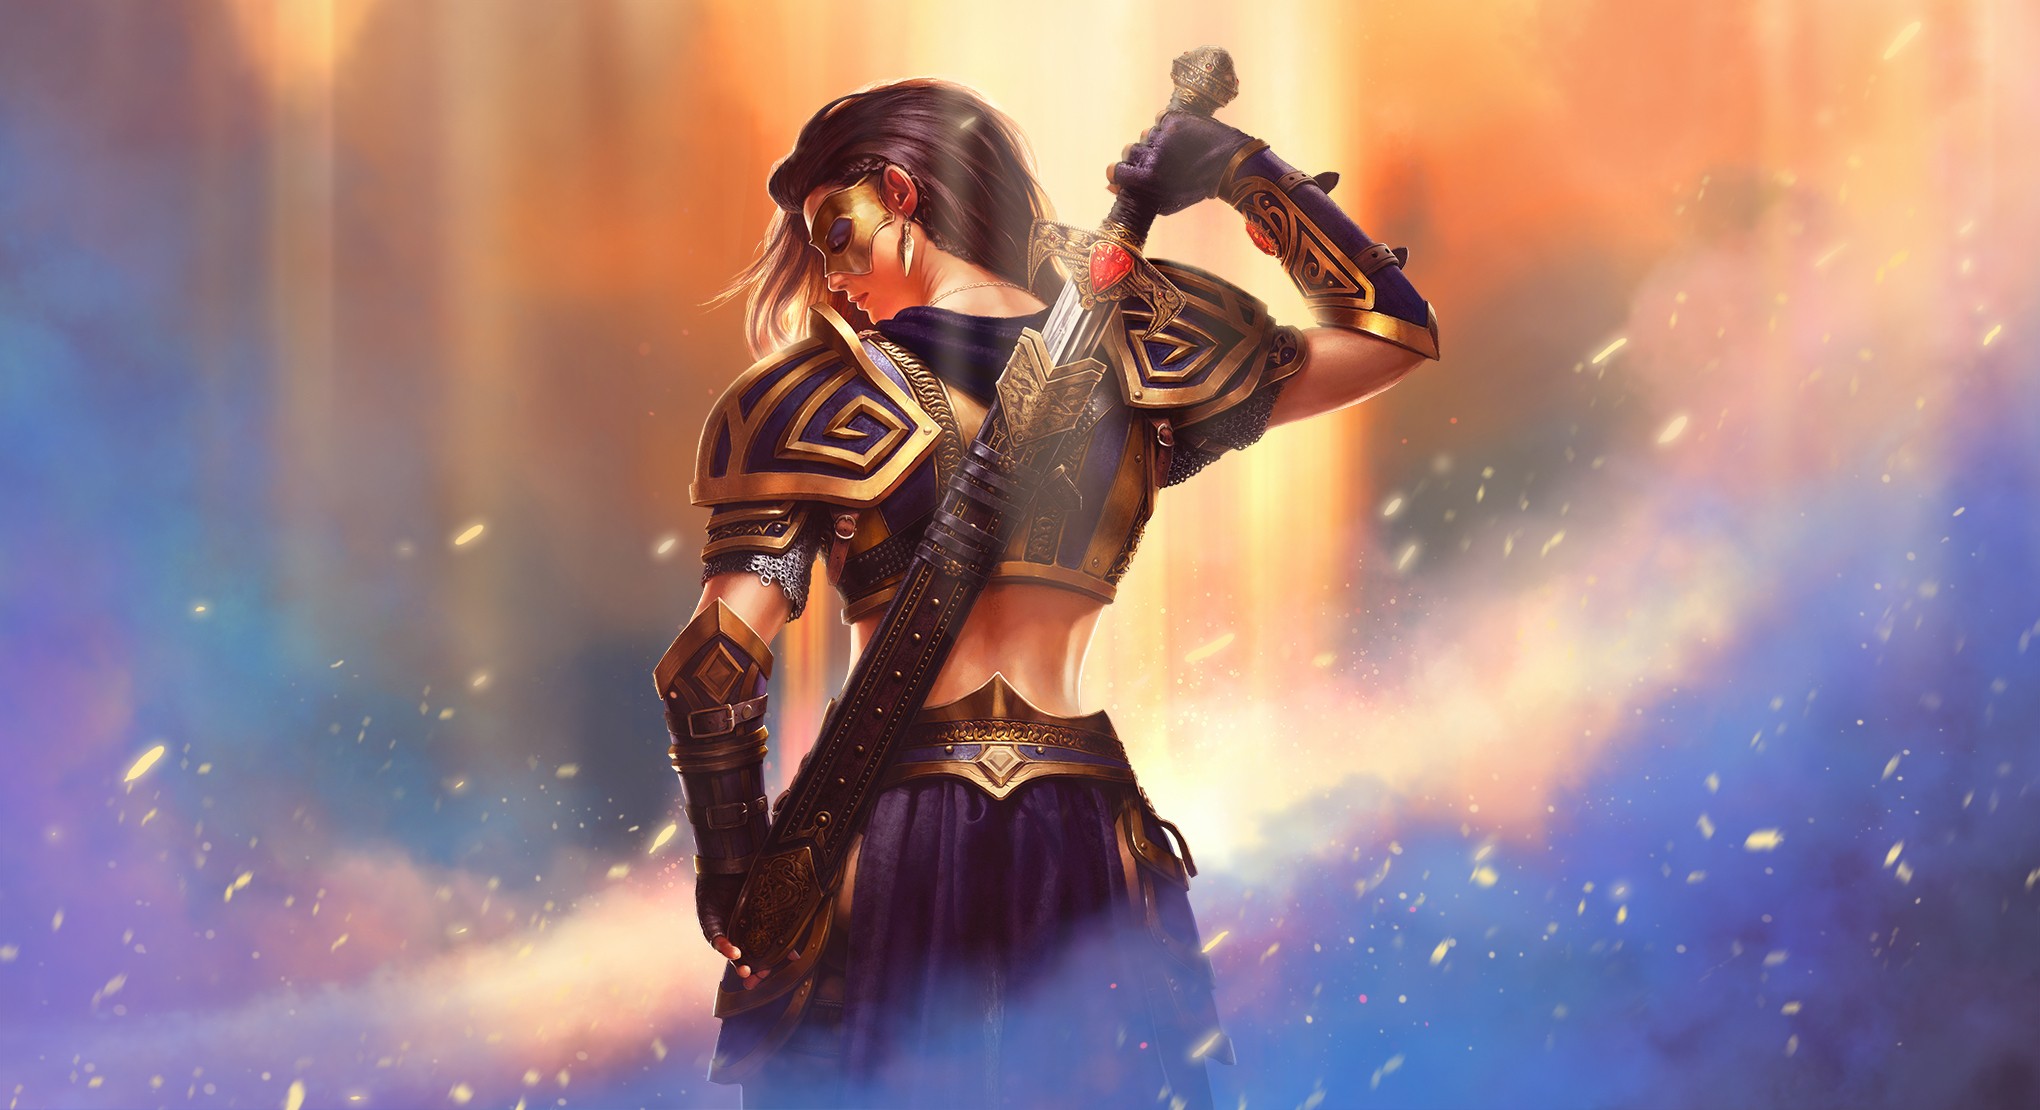 General 2040x1110 fantasy art warrior women sword fantasy girl weapon dark hair fantasy armor armor women with swords